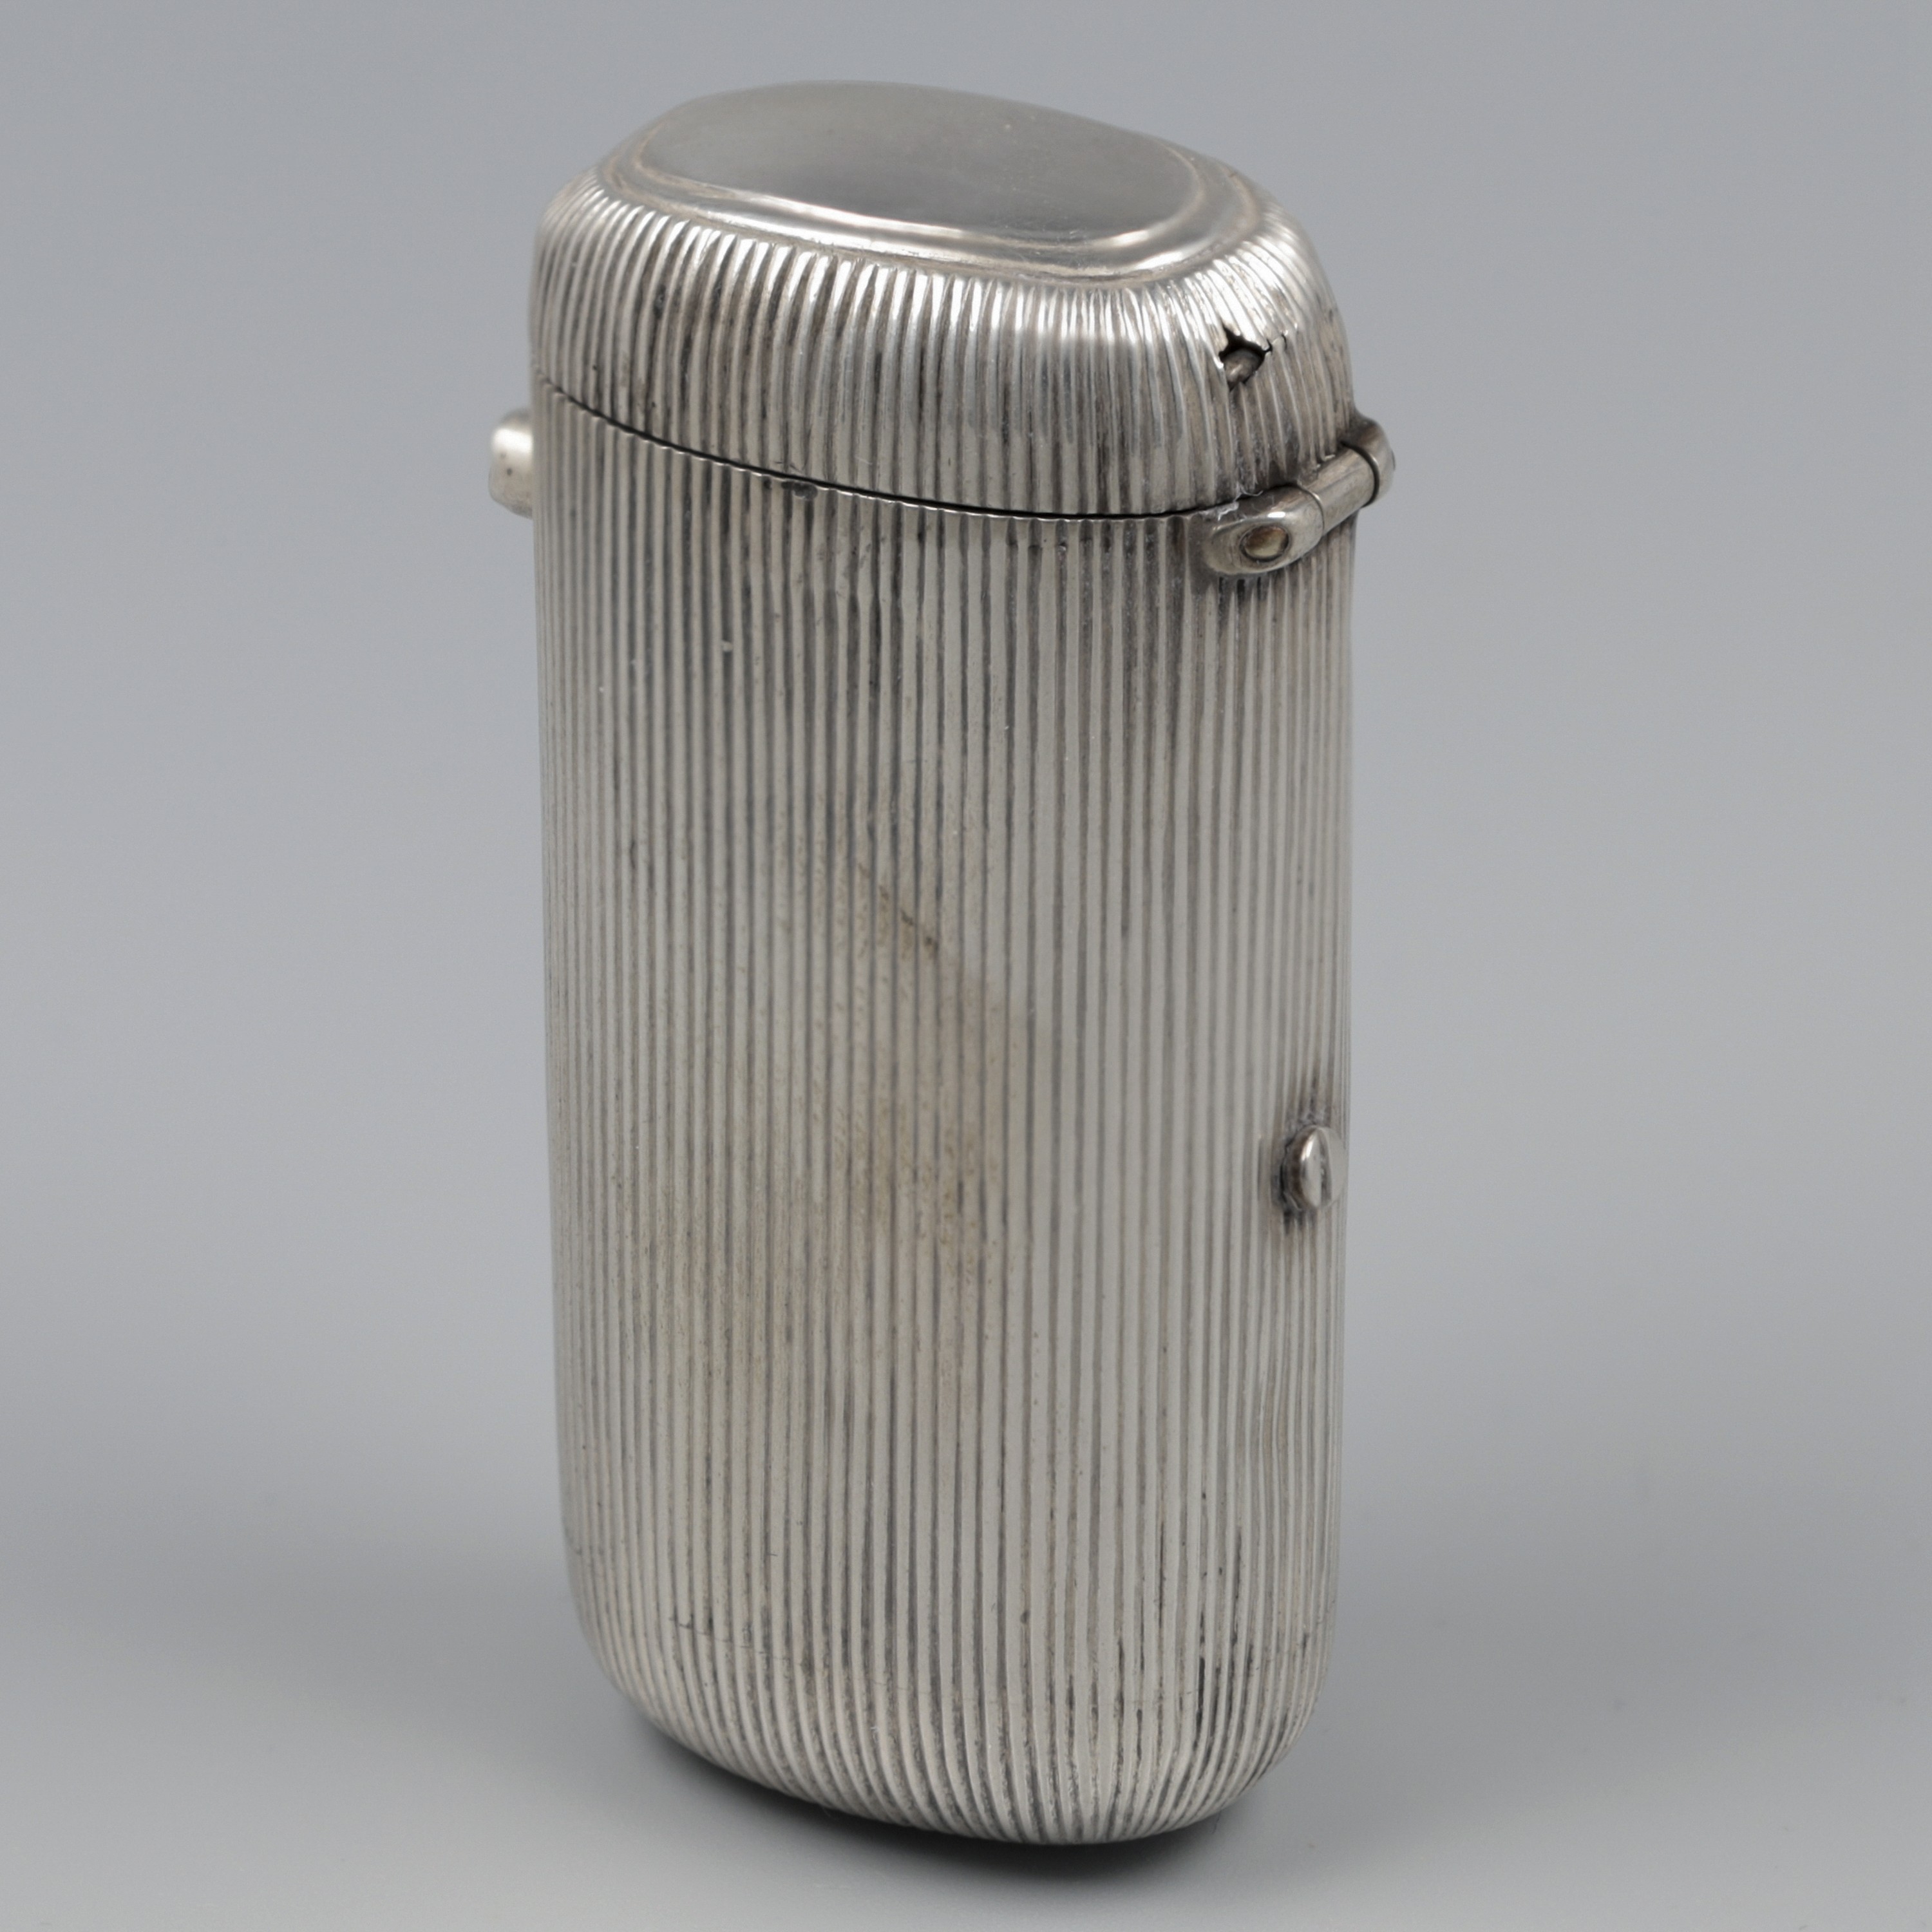 No reserve - Tinder box / Vesta Case silver. - Image 2 of 5